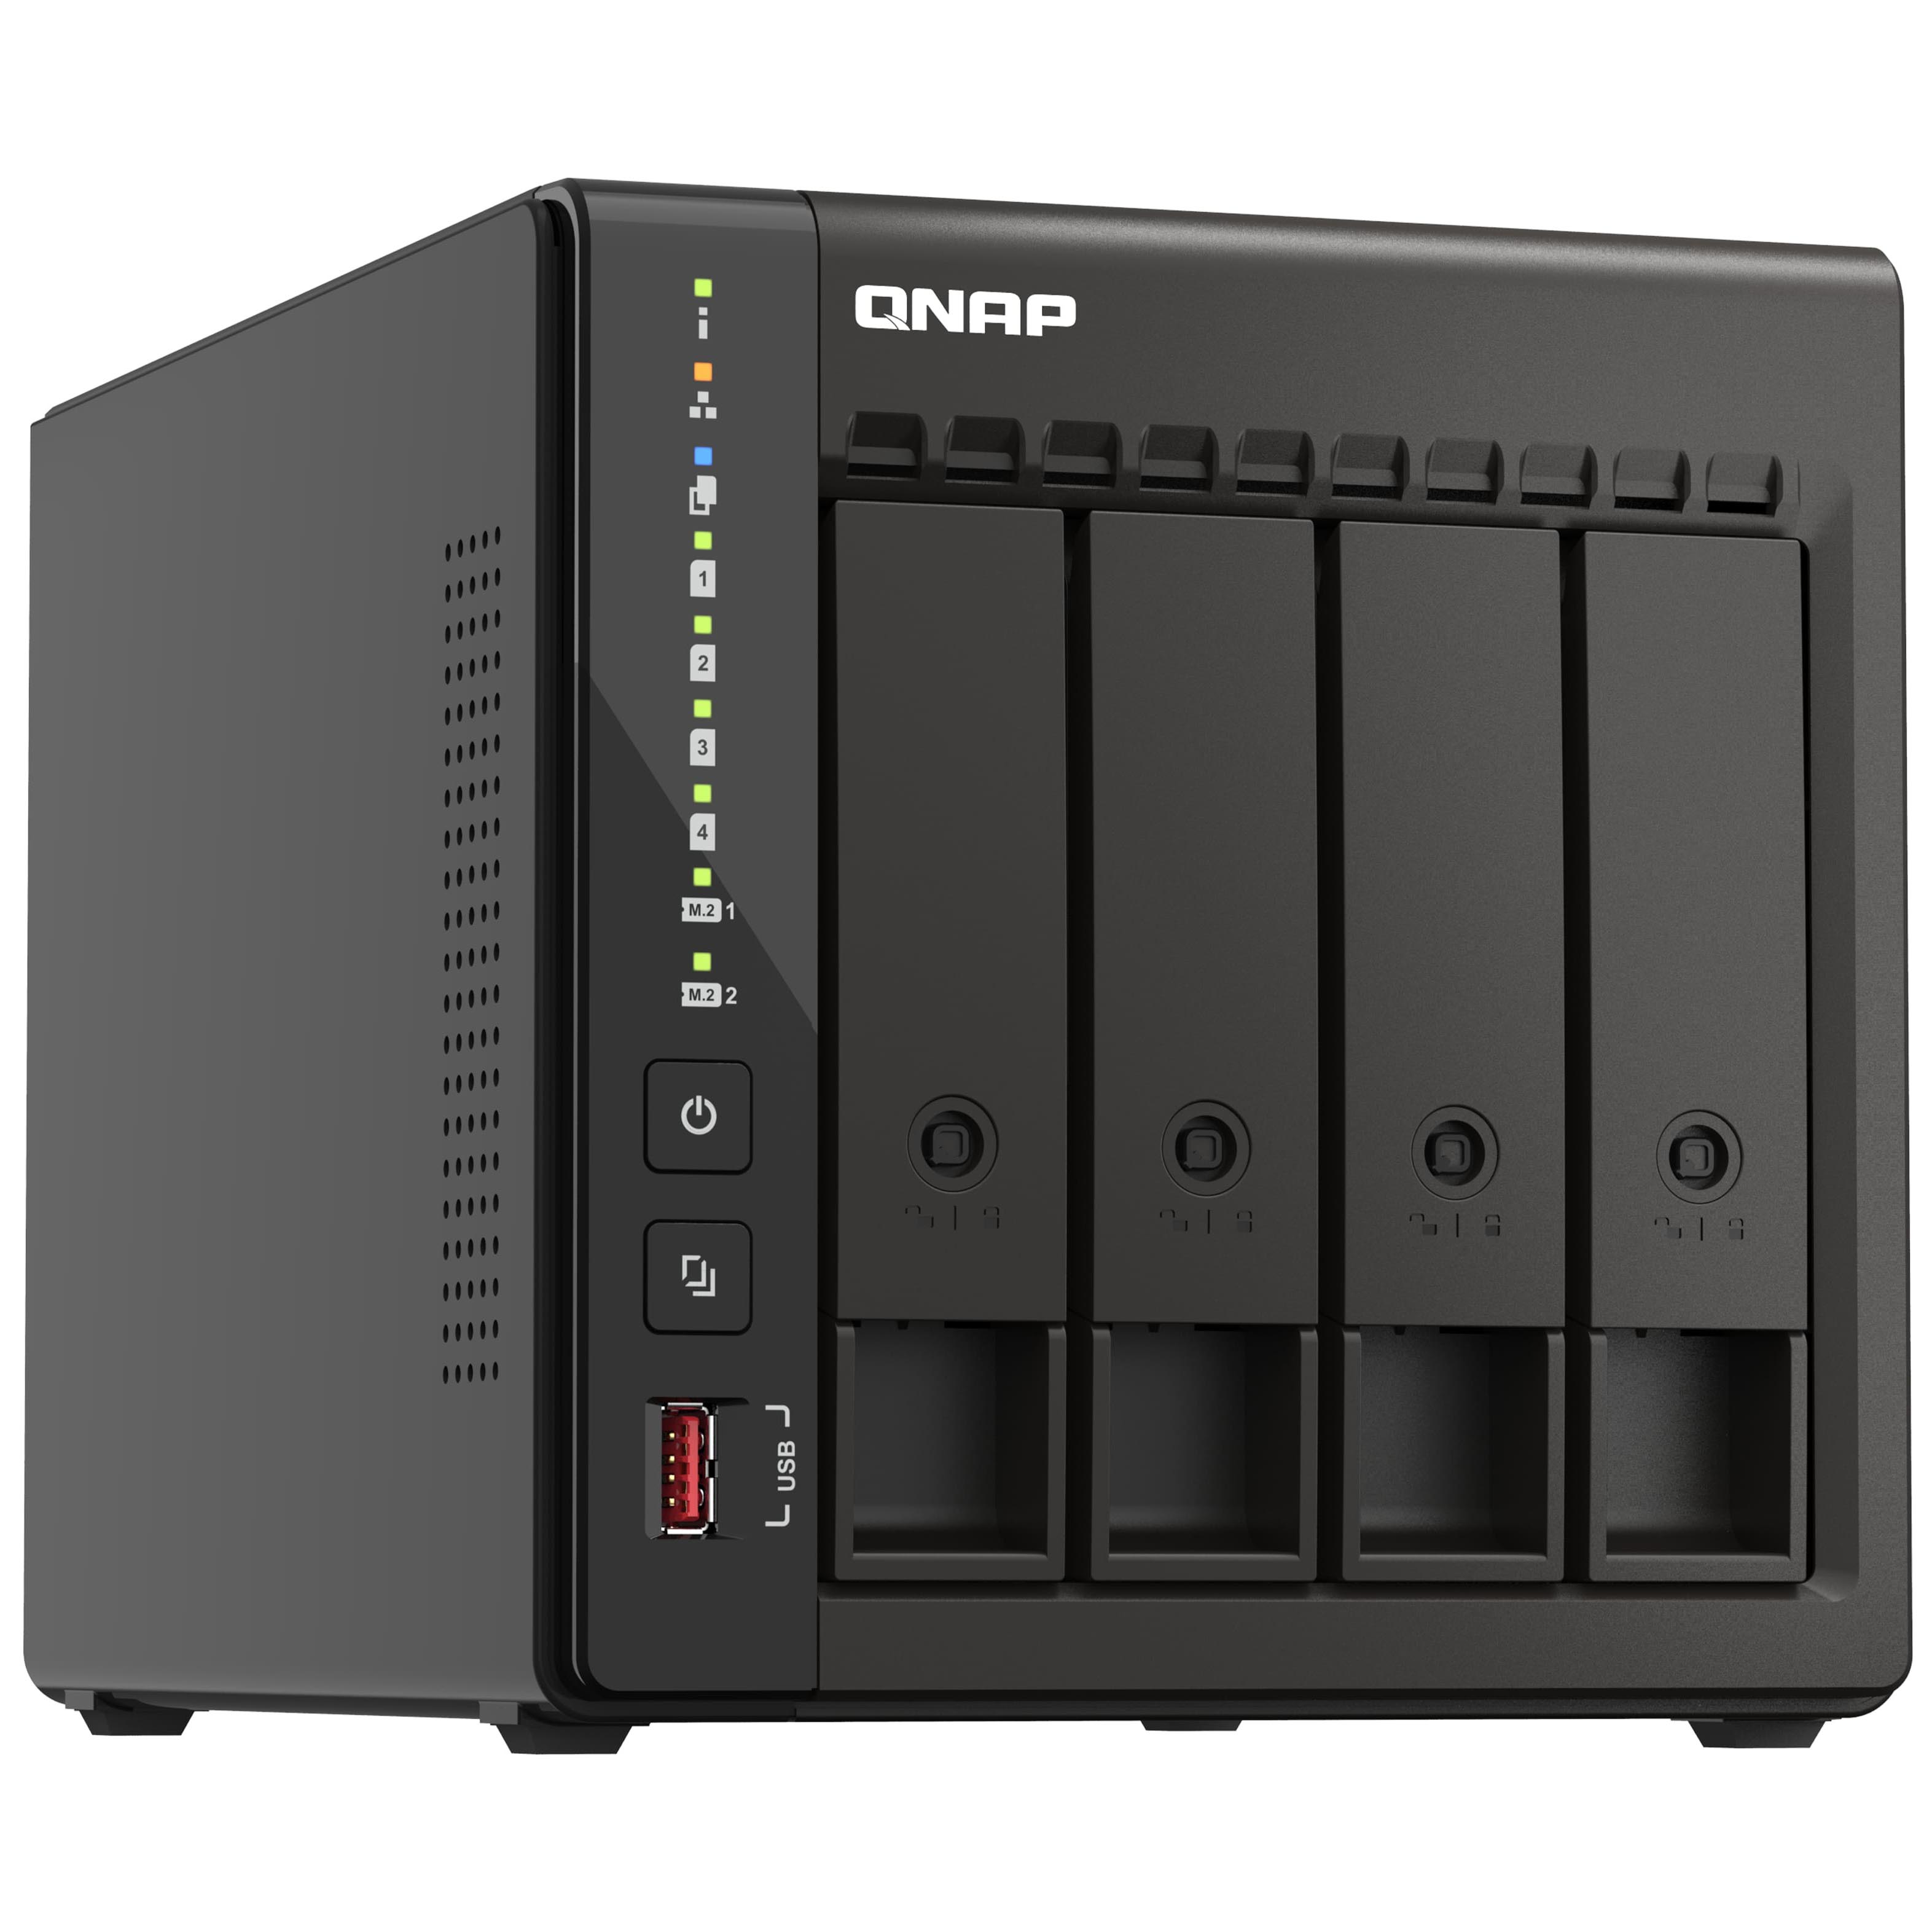 Сетевое хранилище QNAP TS-453E, 4 отсека, 8Гб DDR4, без дисков, черный сетевой raid накопитель qnap ts 453e 8g